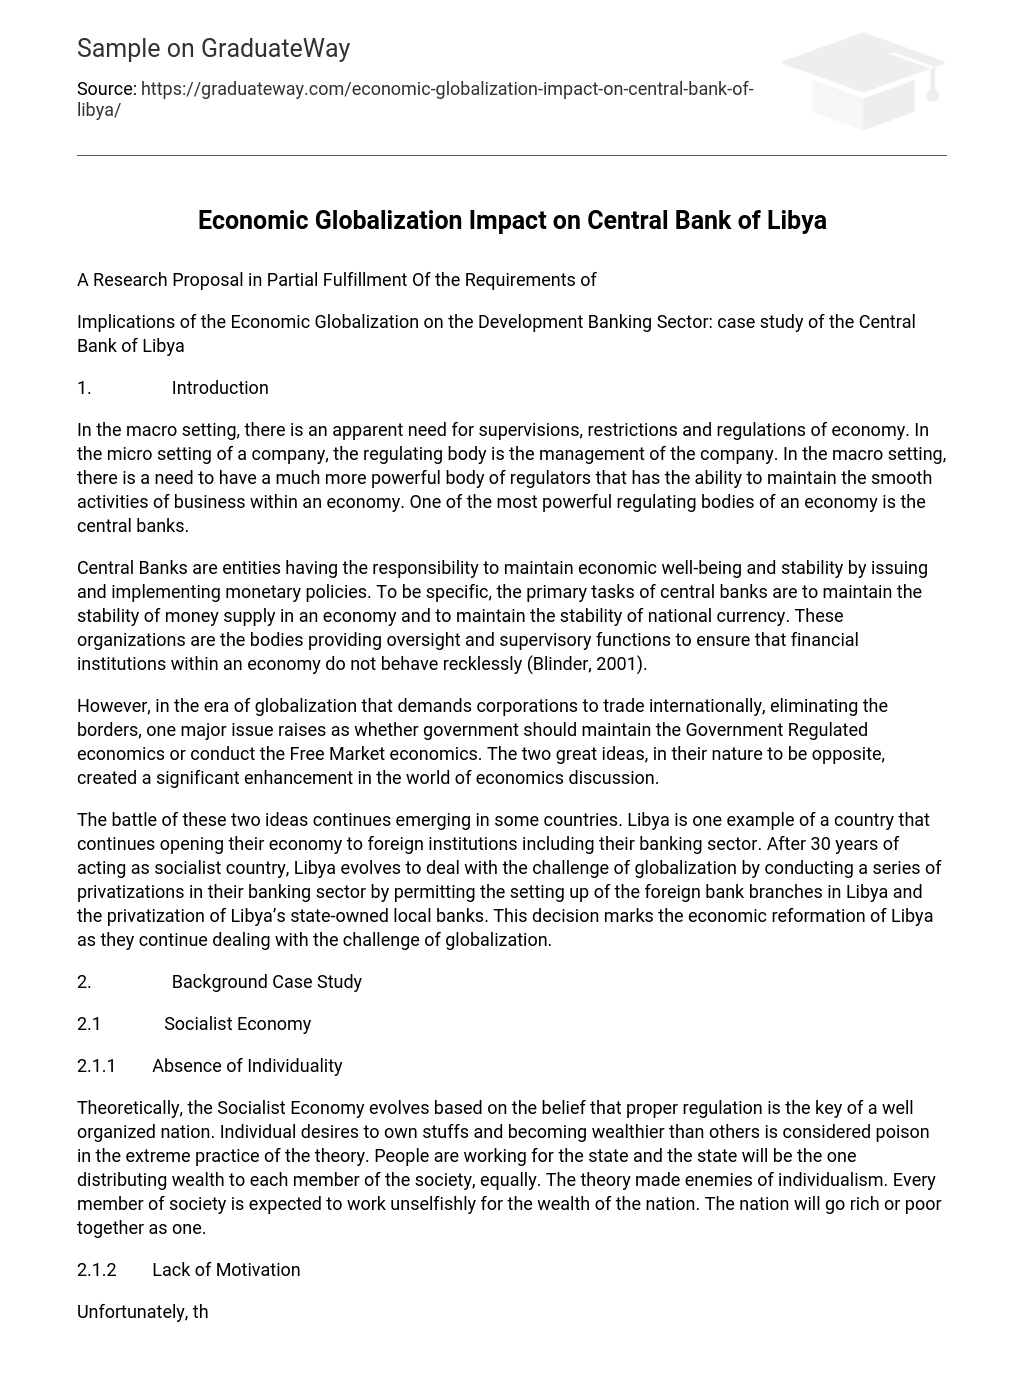 Economic Globalization Impact on Central Bank of Libya